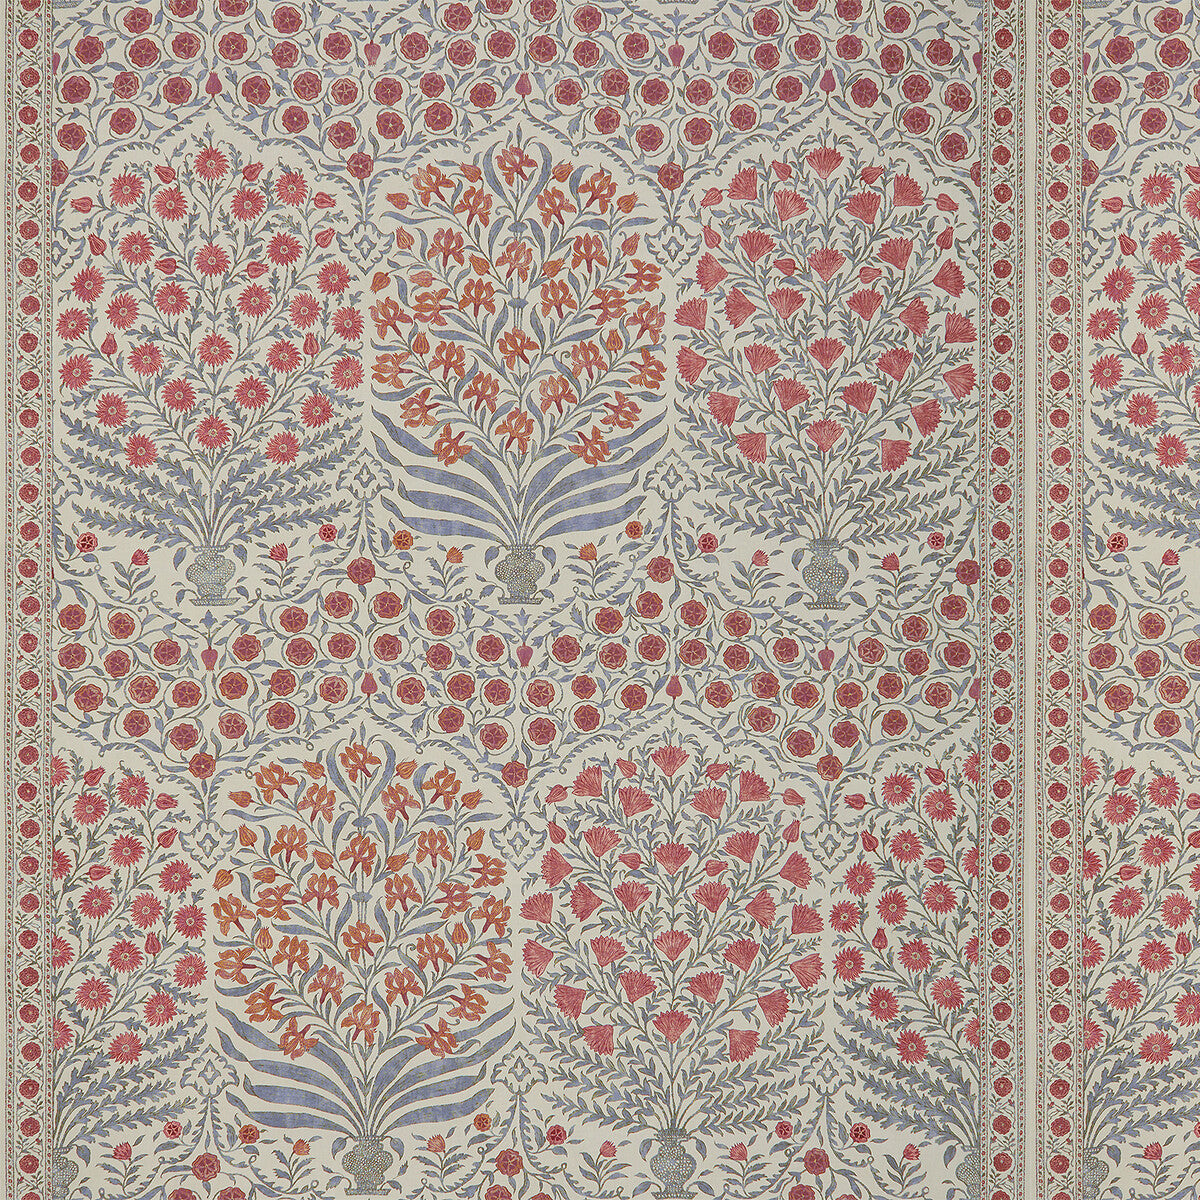 Sameera fabric in red/blue color - pattern 2017108.519.0 - by Lee Jofa in the Oscar De La Renta III collection